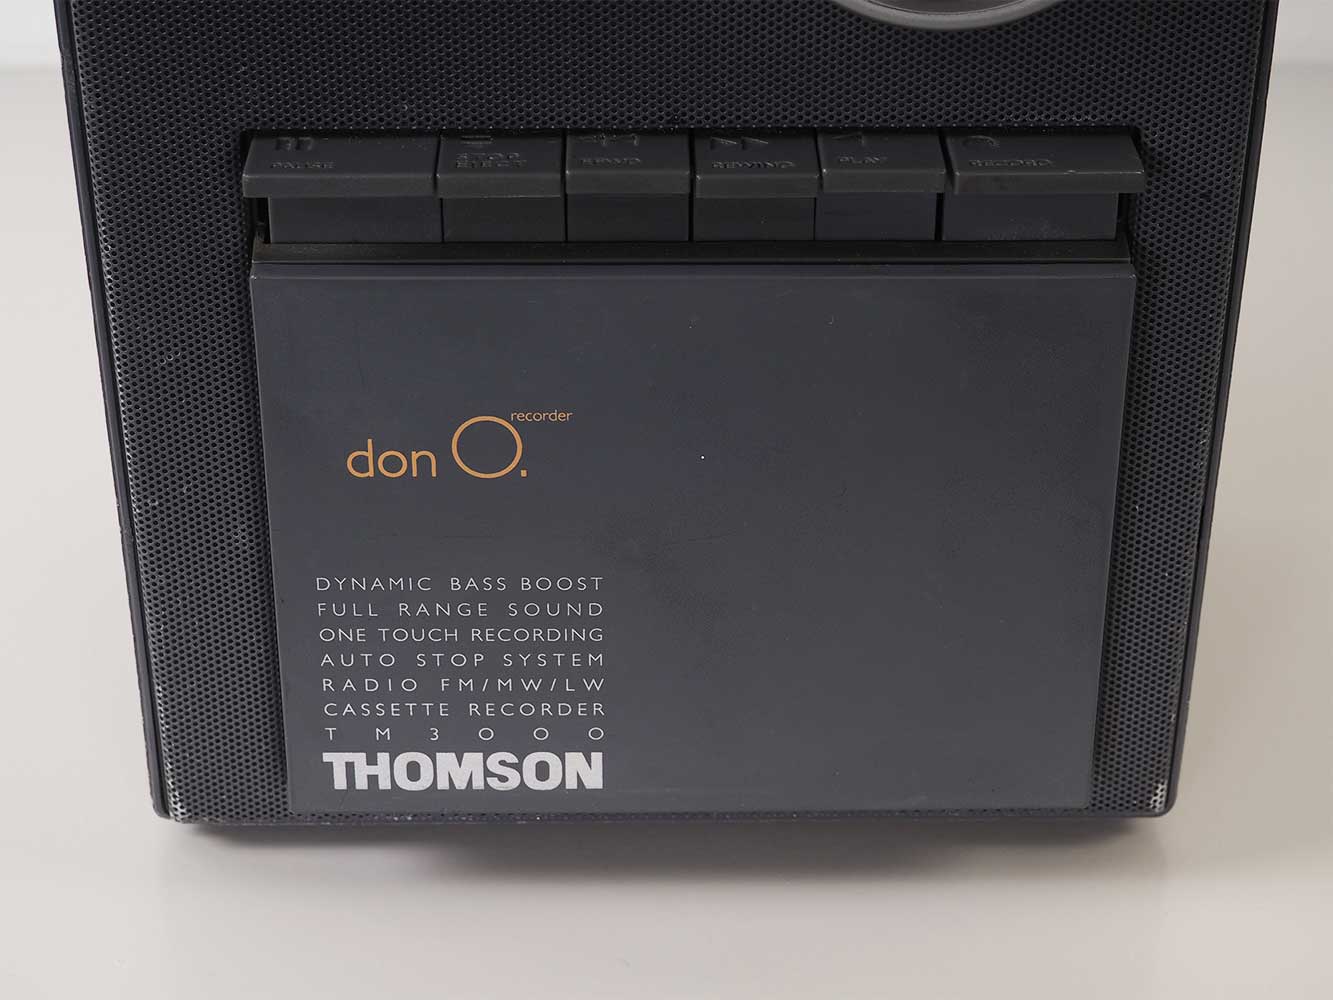 Thomson radio/cassette recorder - Don O